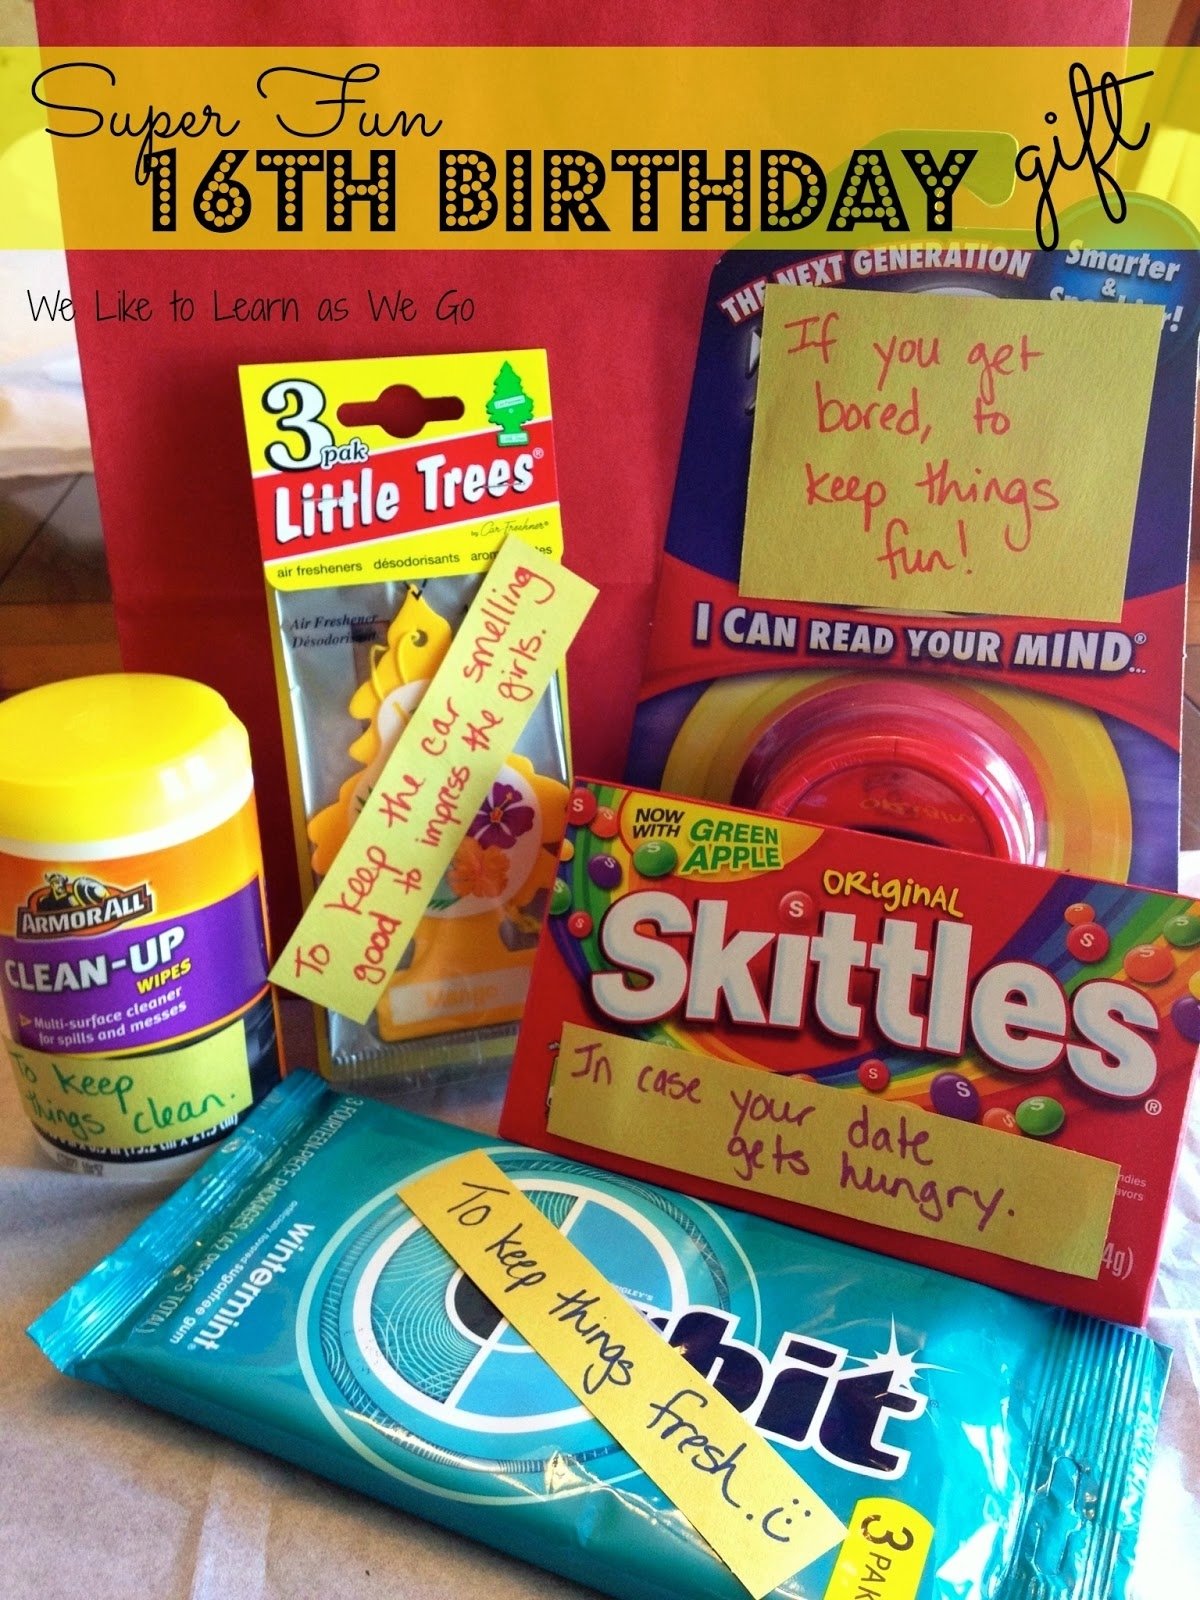 10 Wonderful Birthday Ideas For 16 Year Old gift ideas for boyfriend gift ideas for 16 year old boyfriend birthday 2 2022